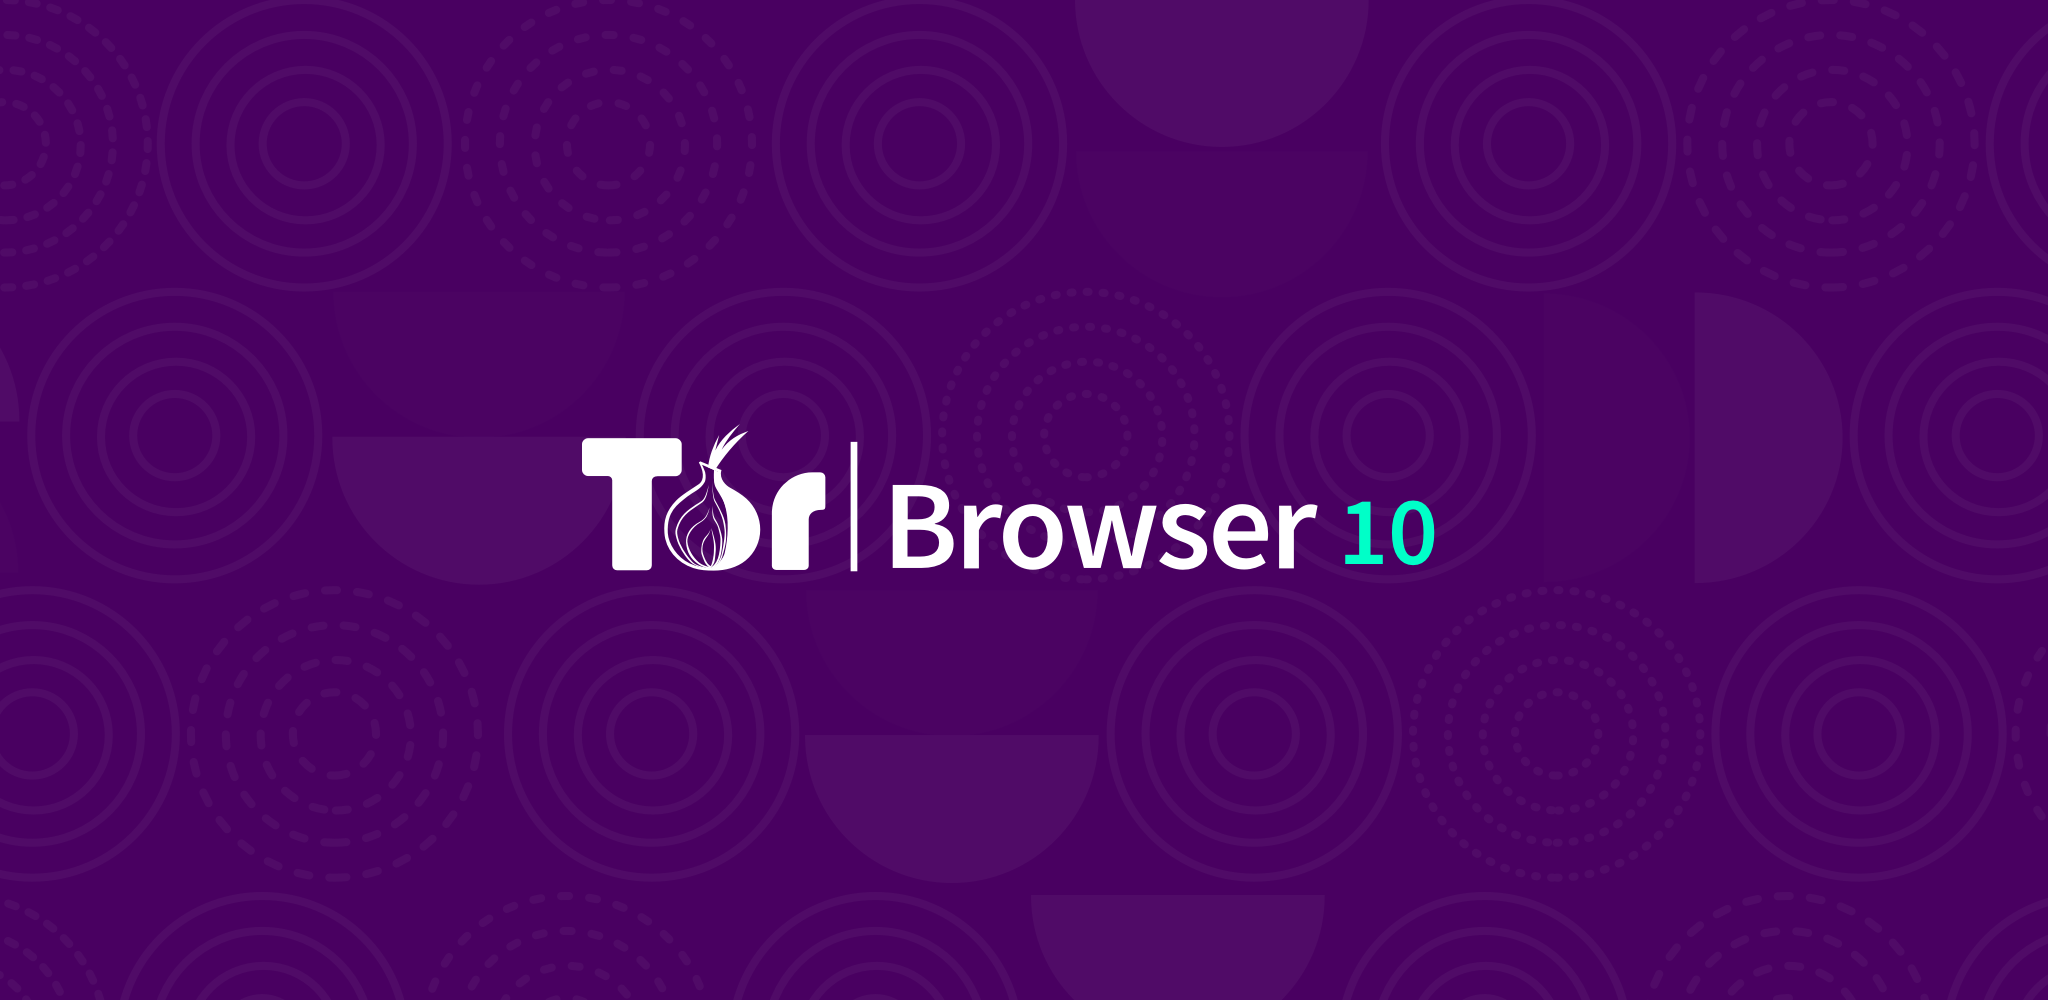 Tor browser mint 17 hidra tor browser games hydra2web